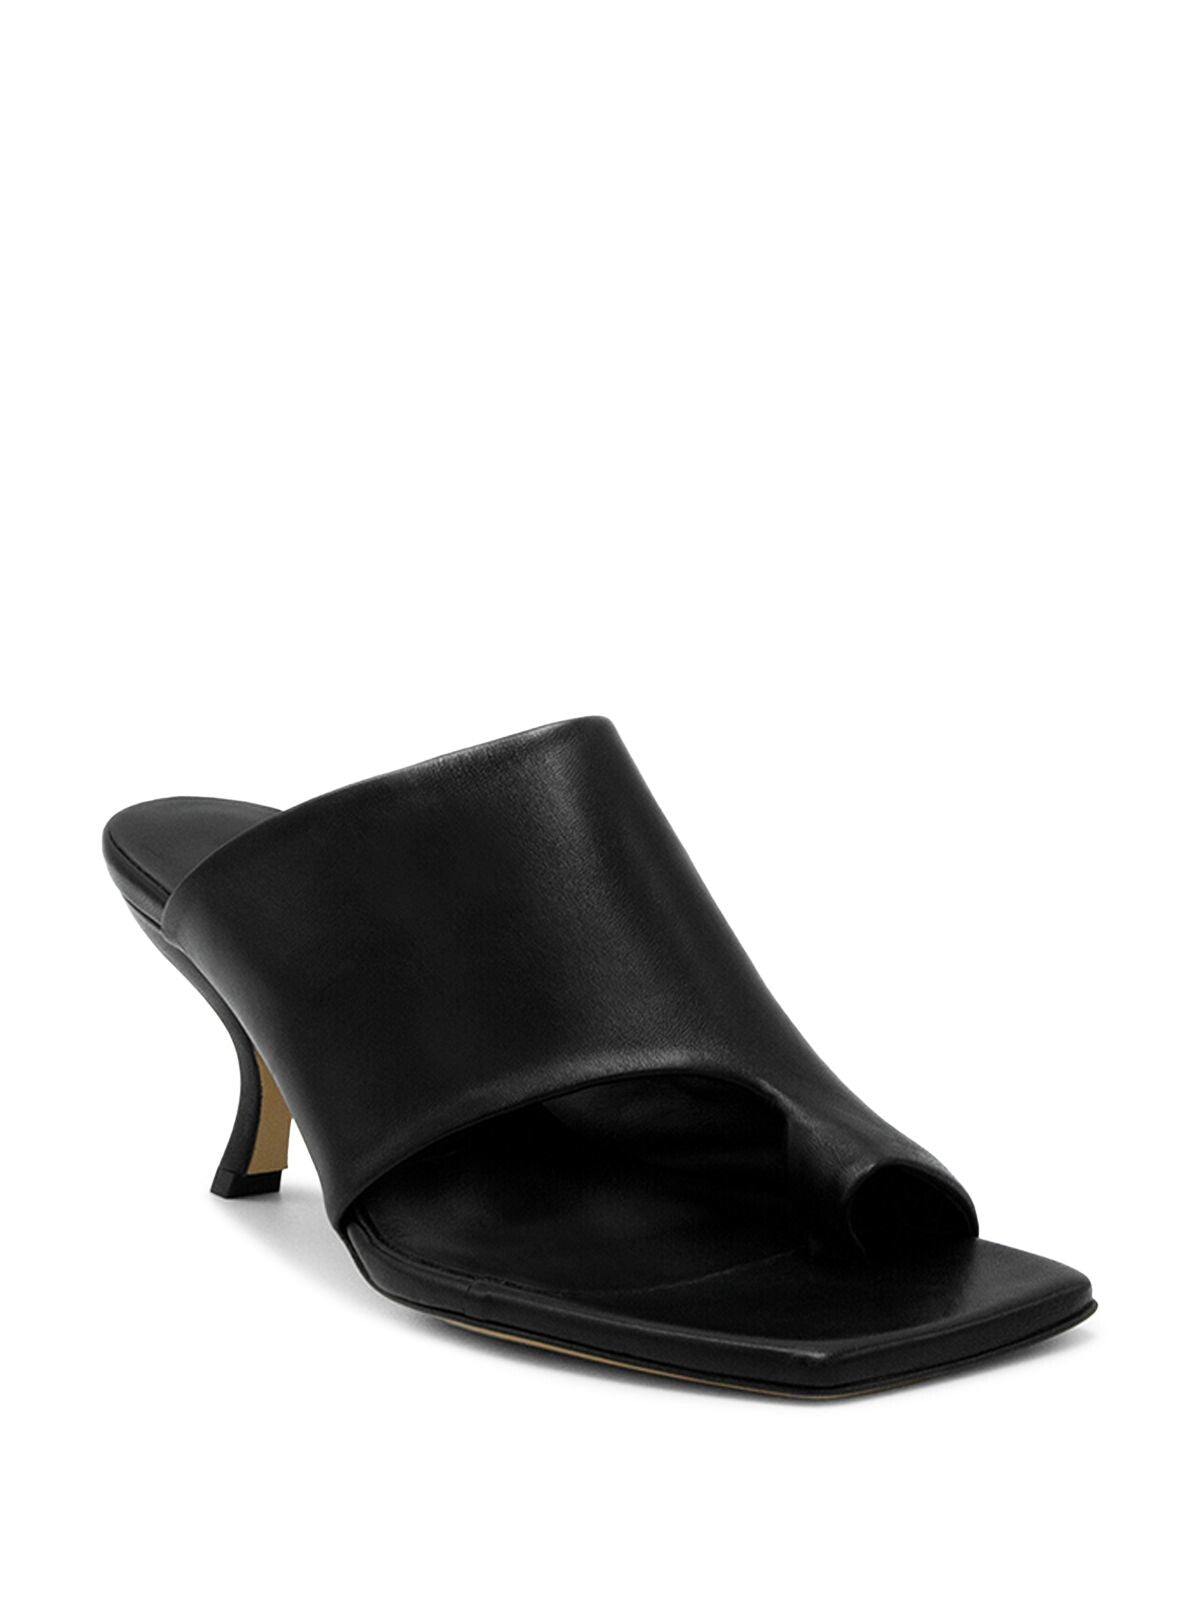 ILIO SMERALDO Womens Black Mule Toe Ring Cushioned Kim Square Toe Slip On Leather Sandals Shoes 39